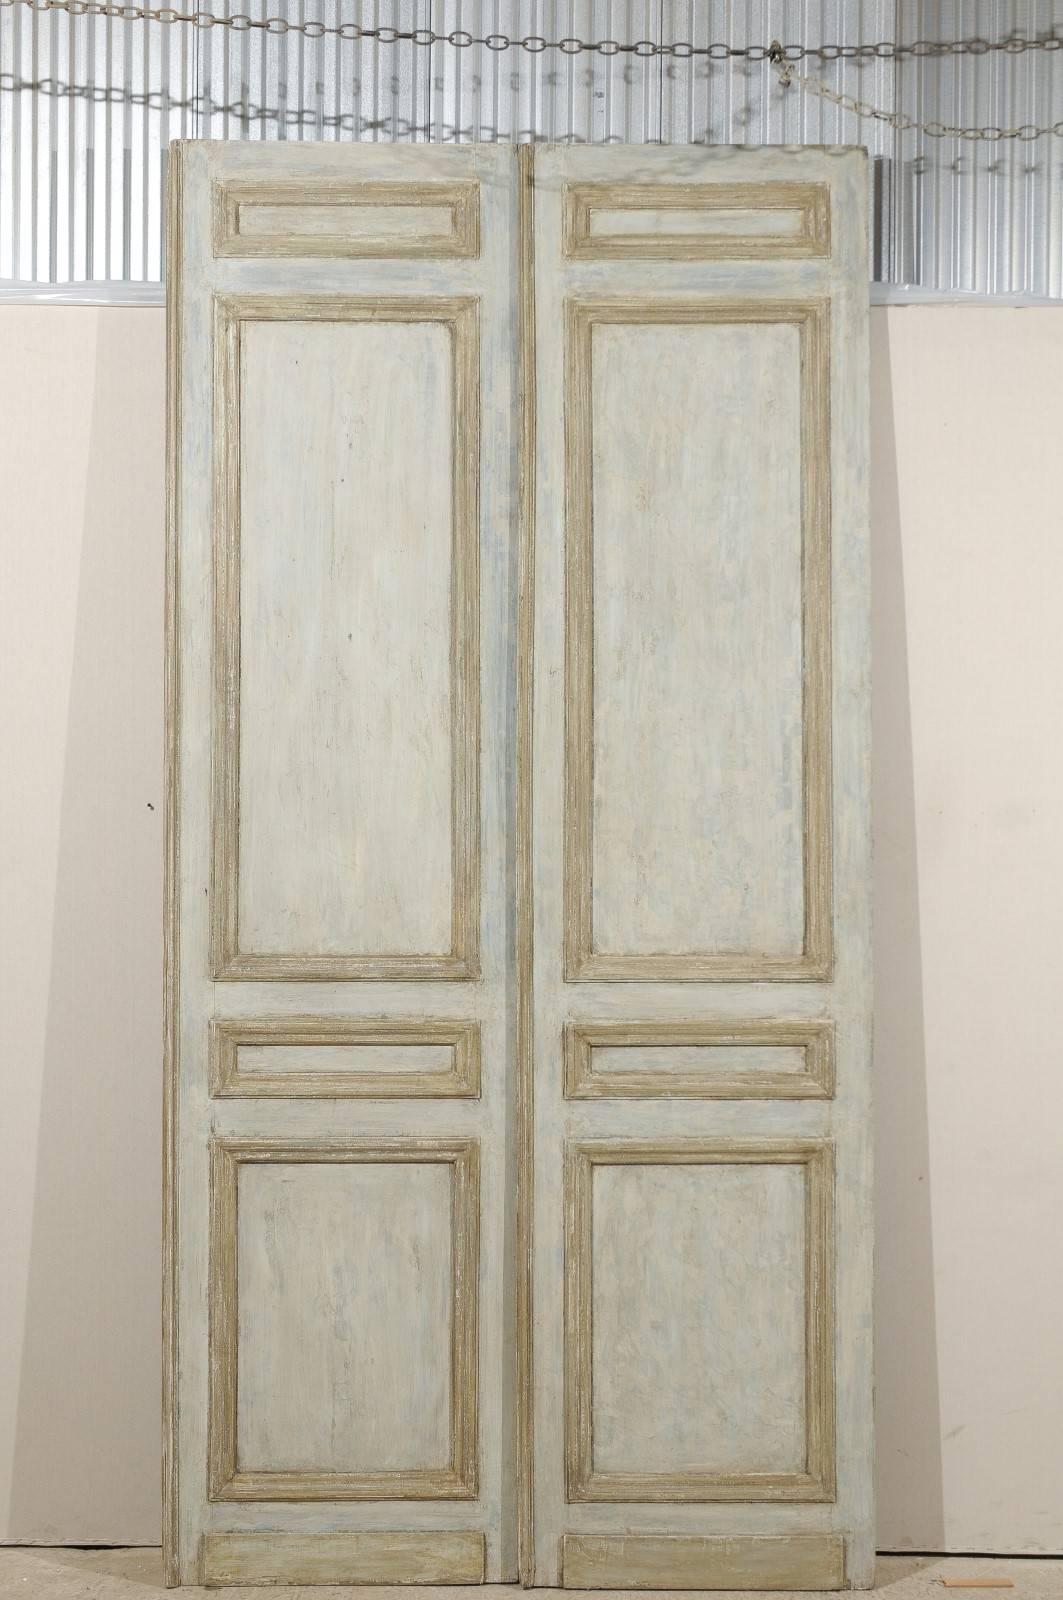 antique folding doors